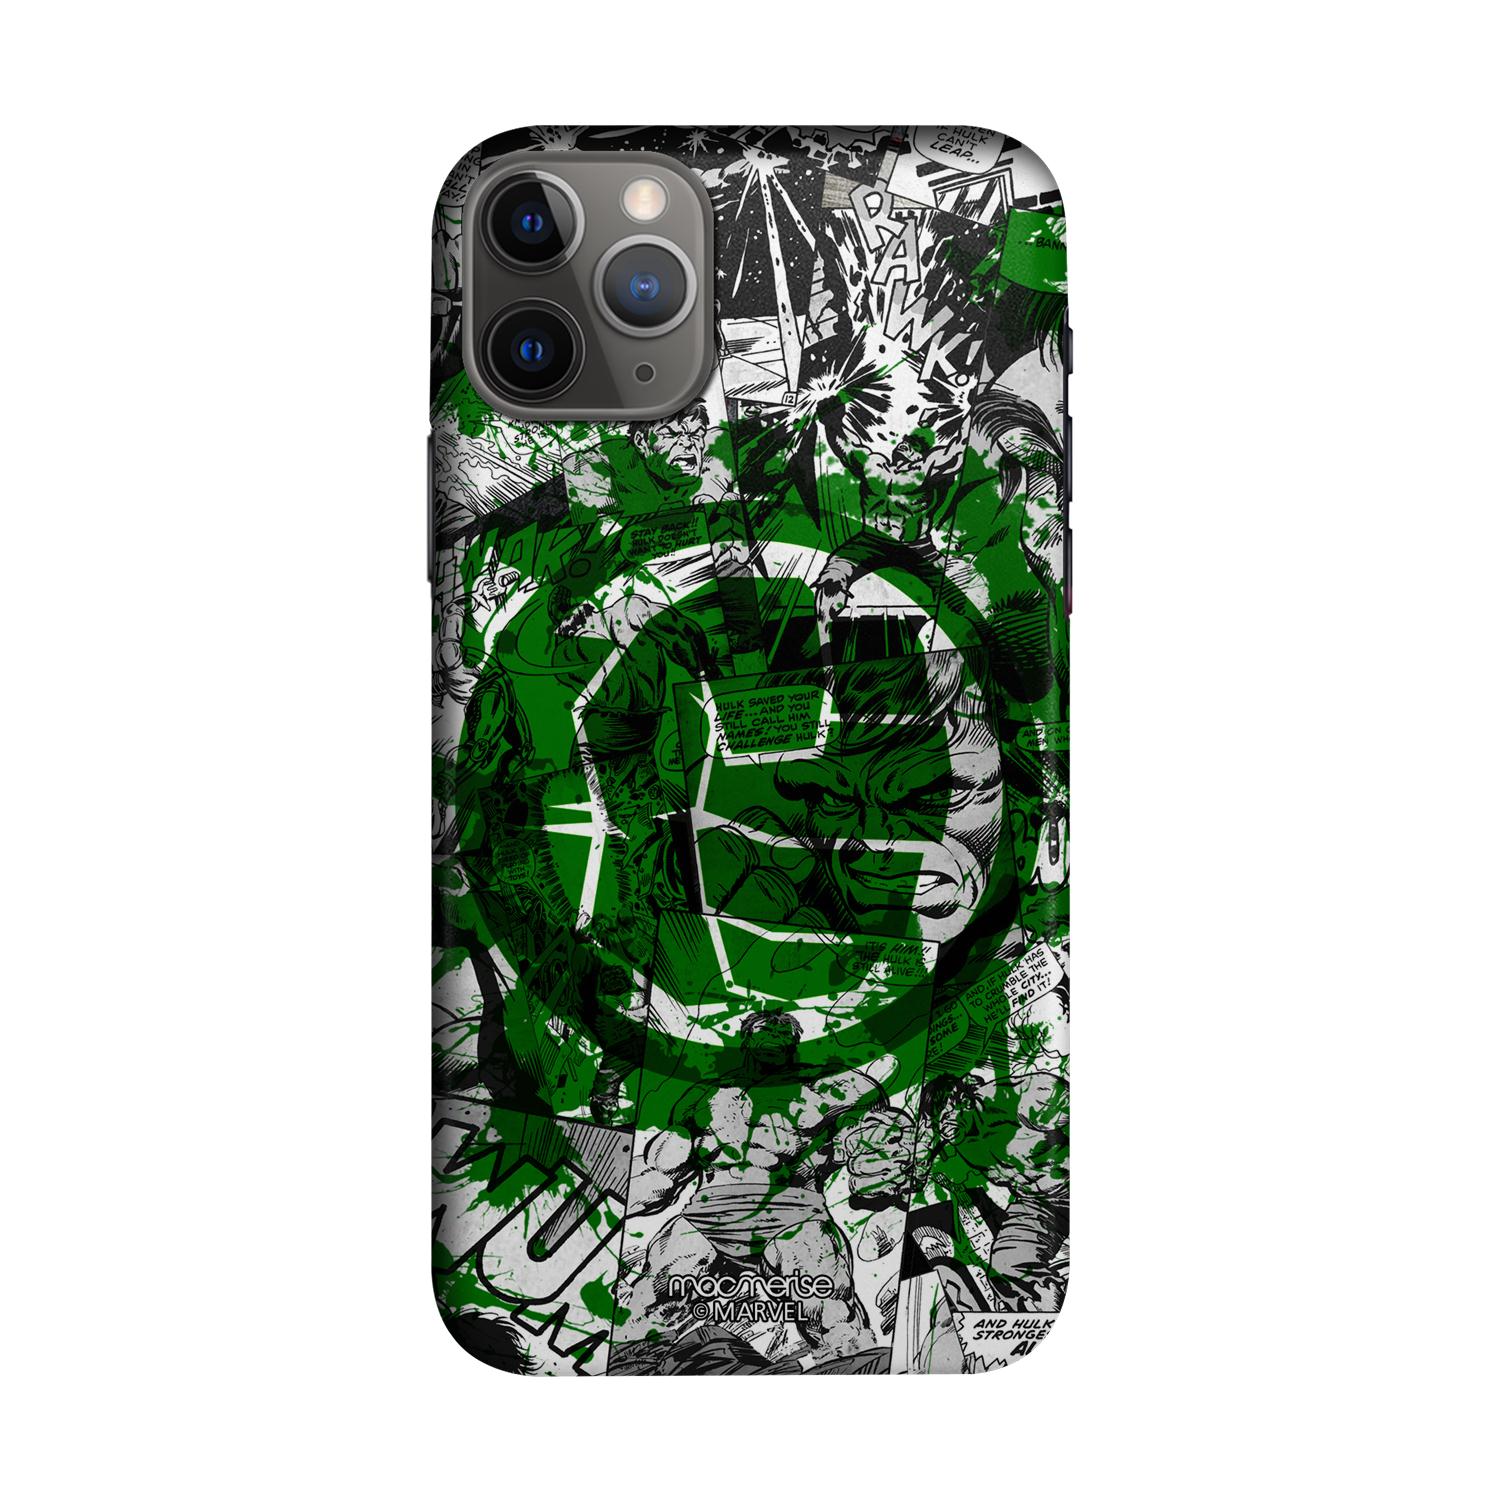 Buy Splash Out Hulk Fist - Sleek Phone Case for iPhone 11 Pro Max Online